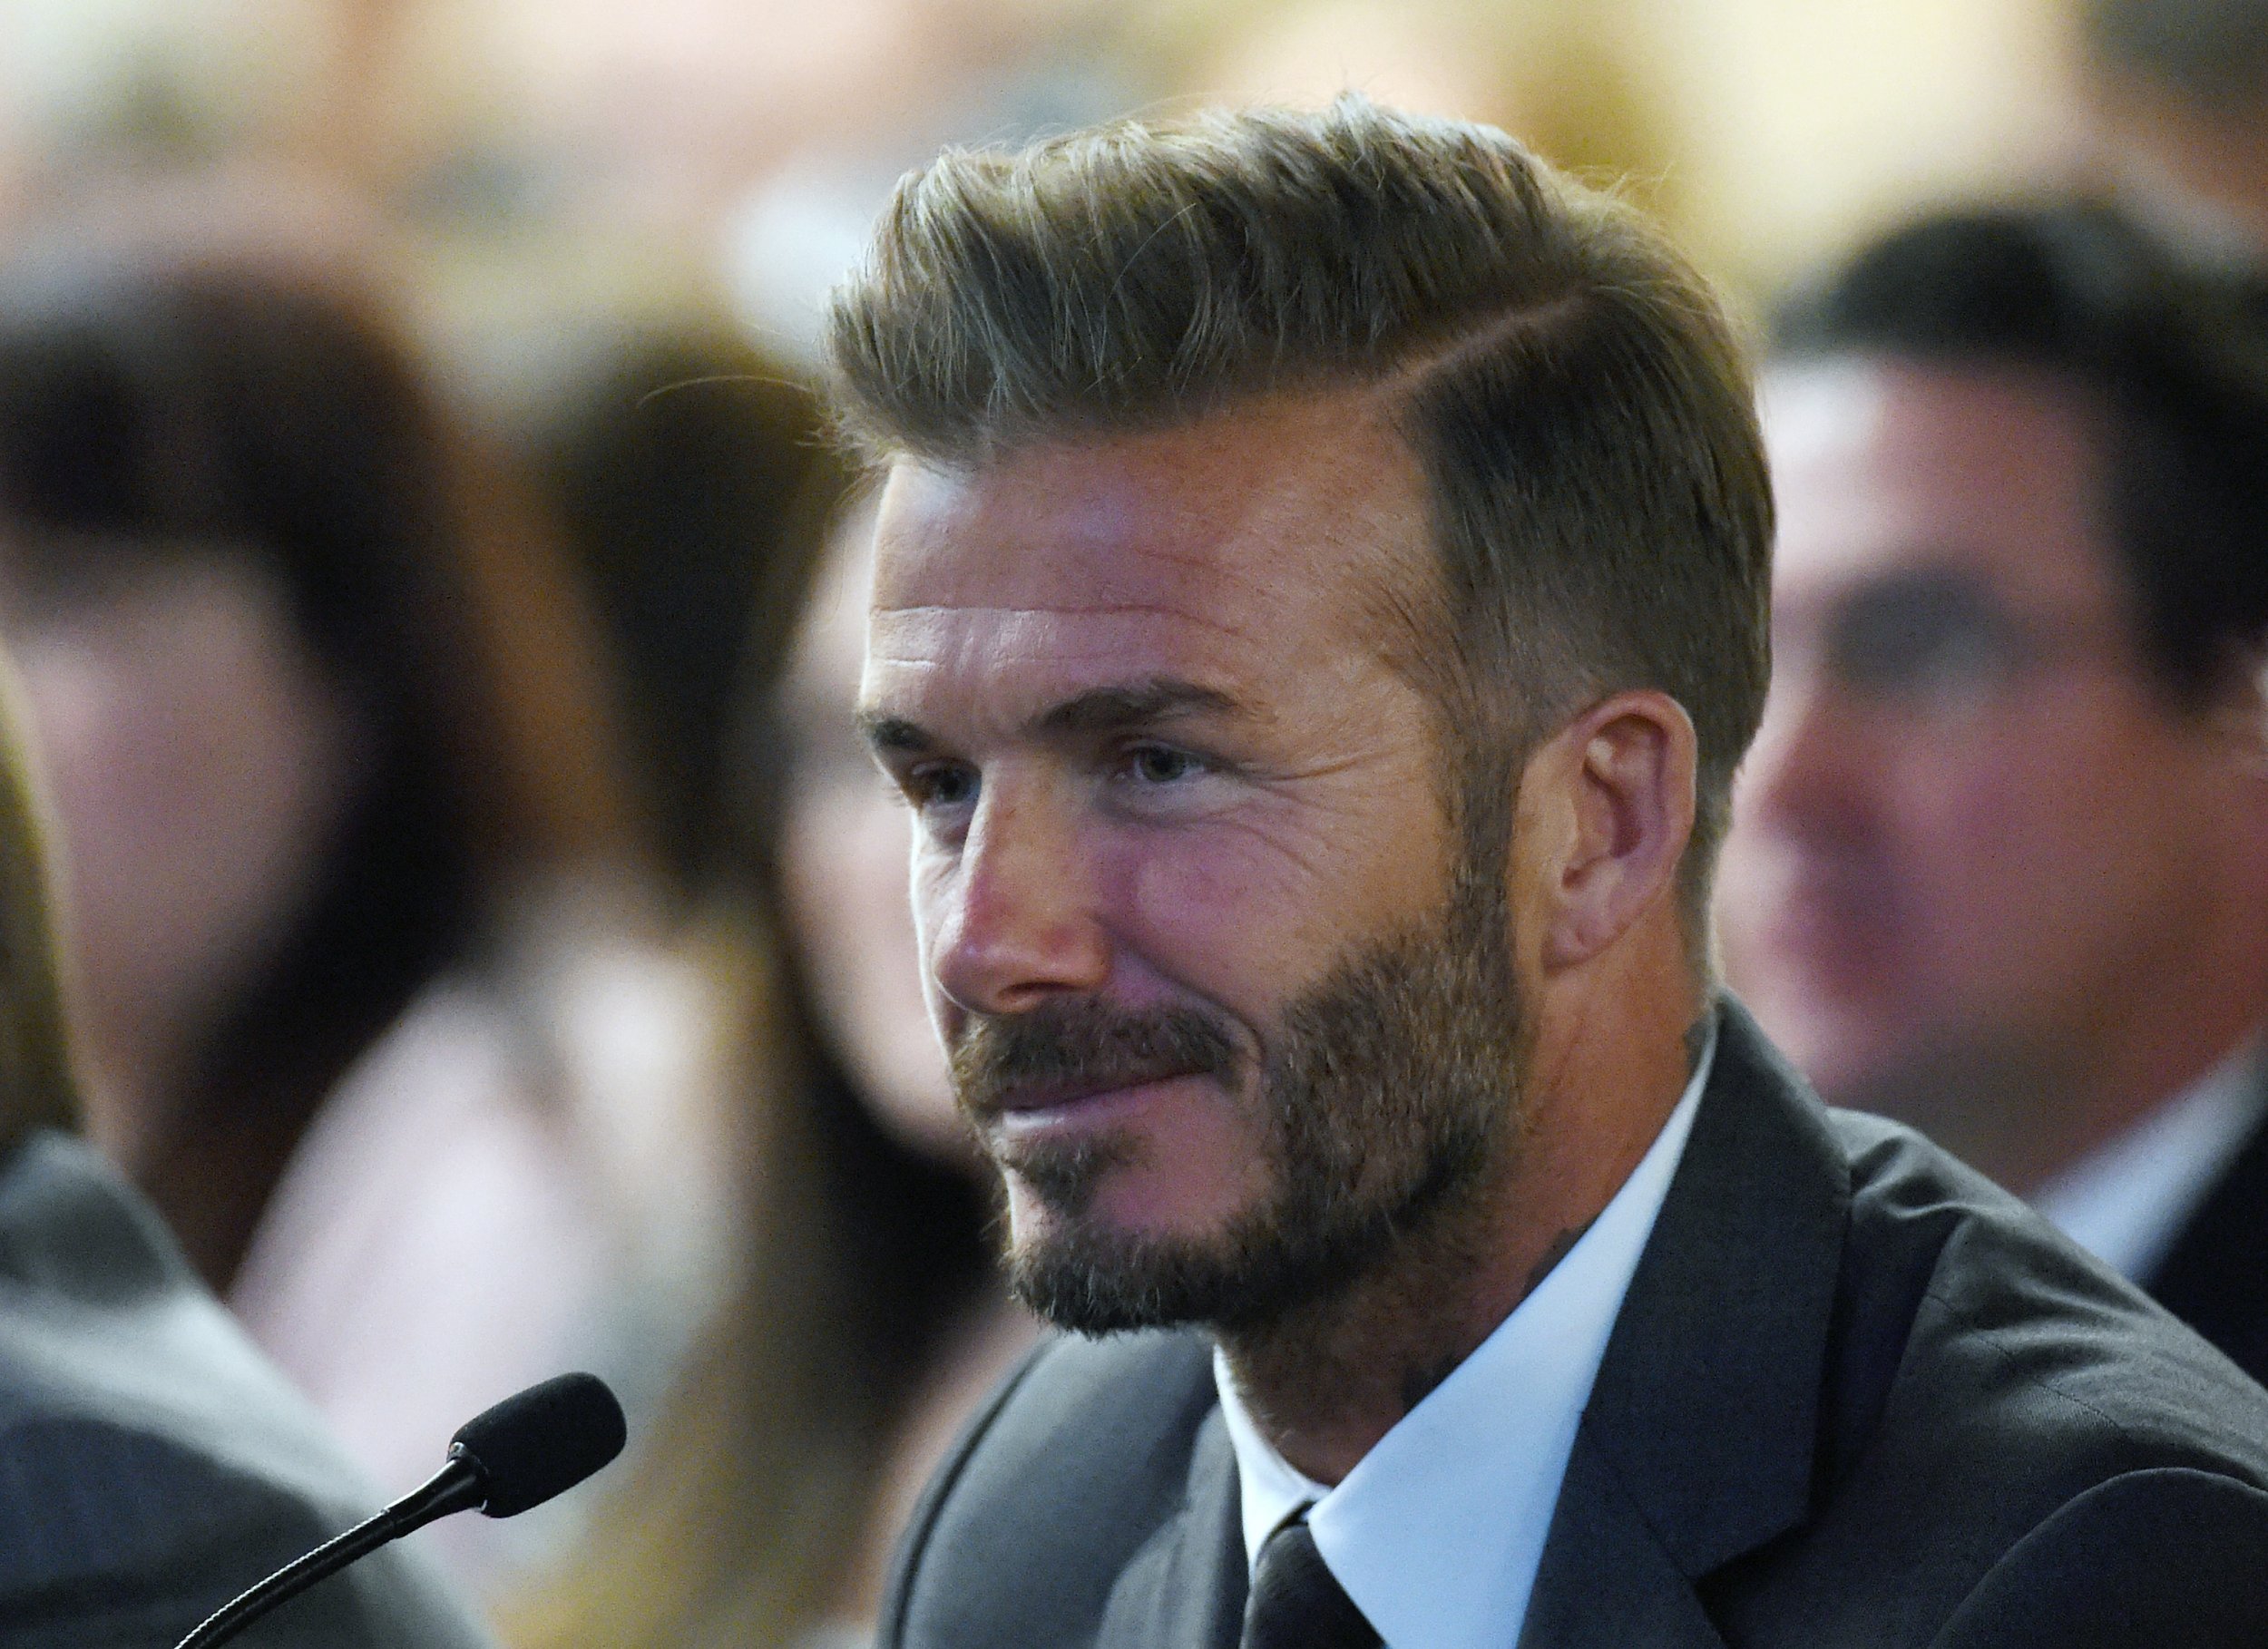 Former Manchester United star David Beckham